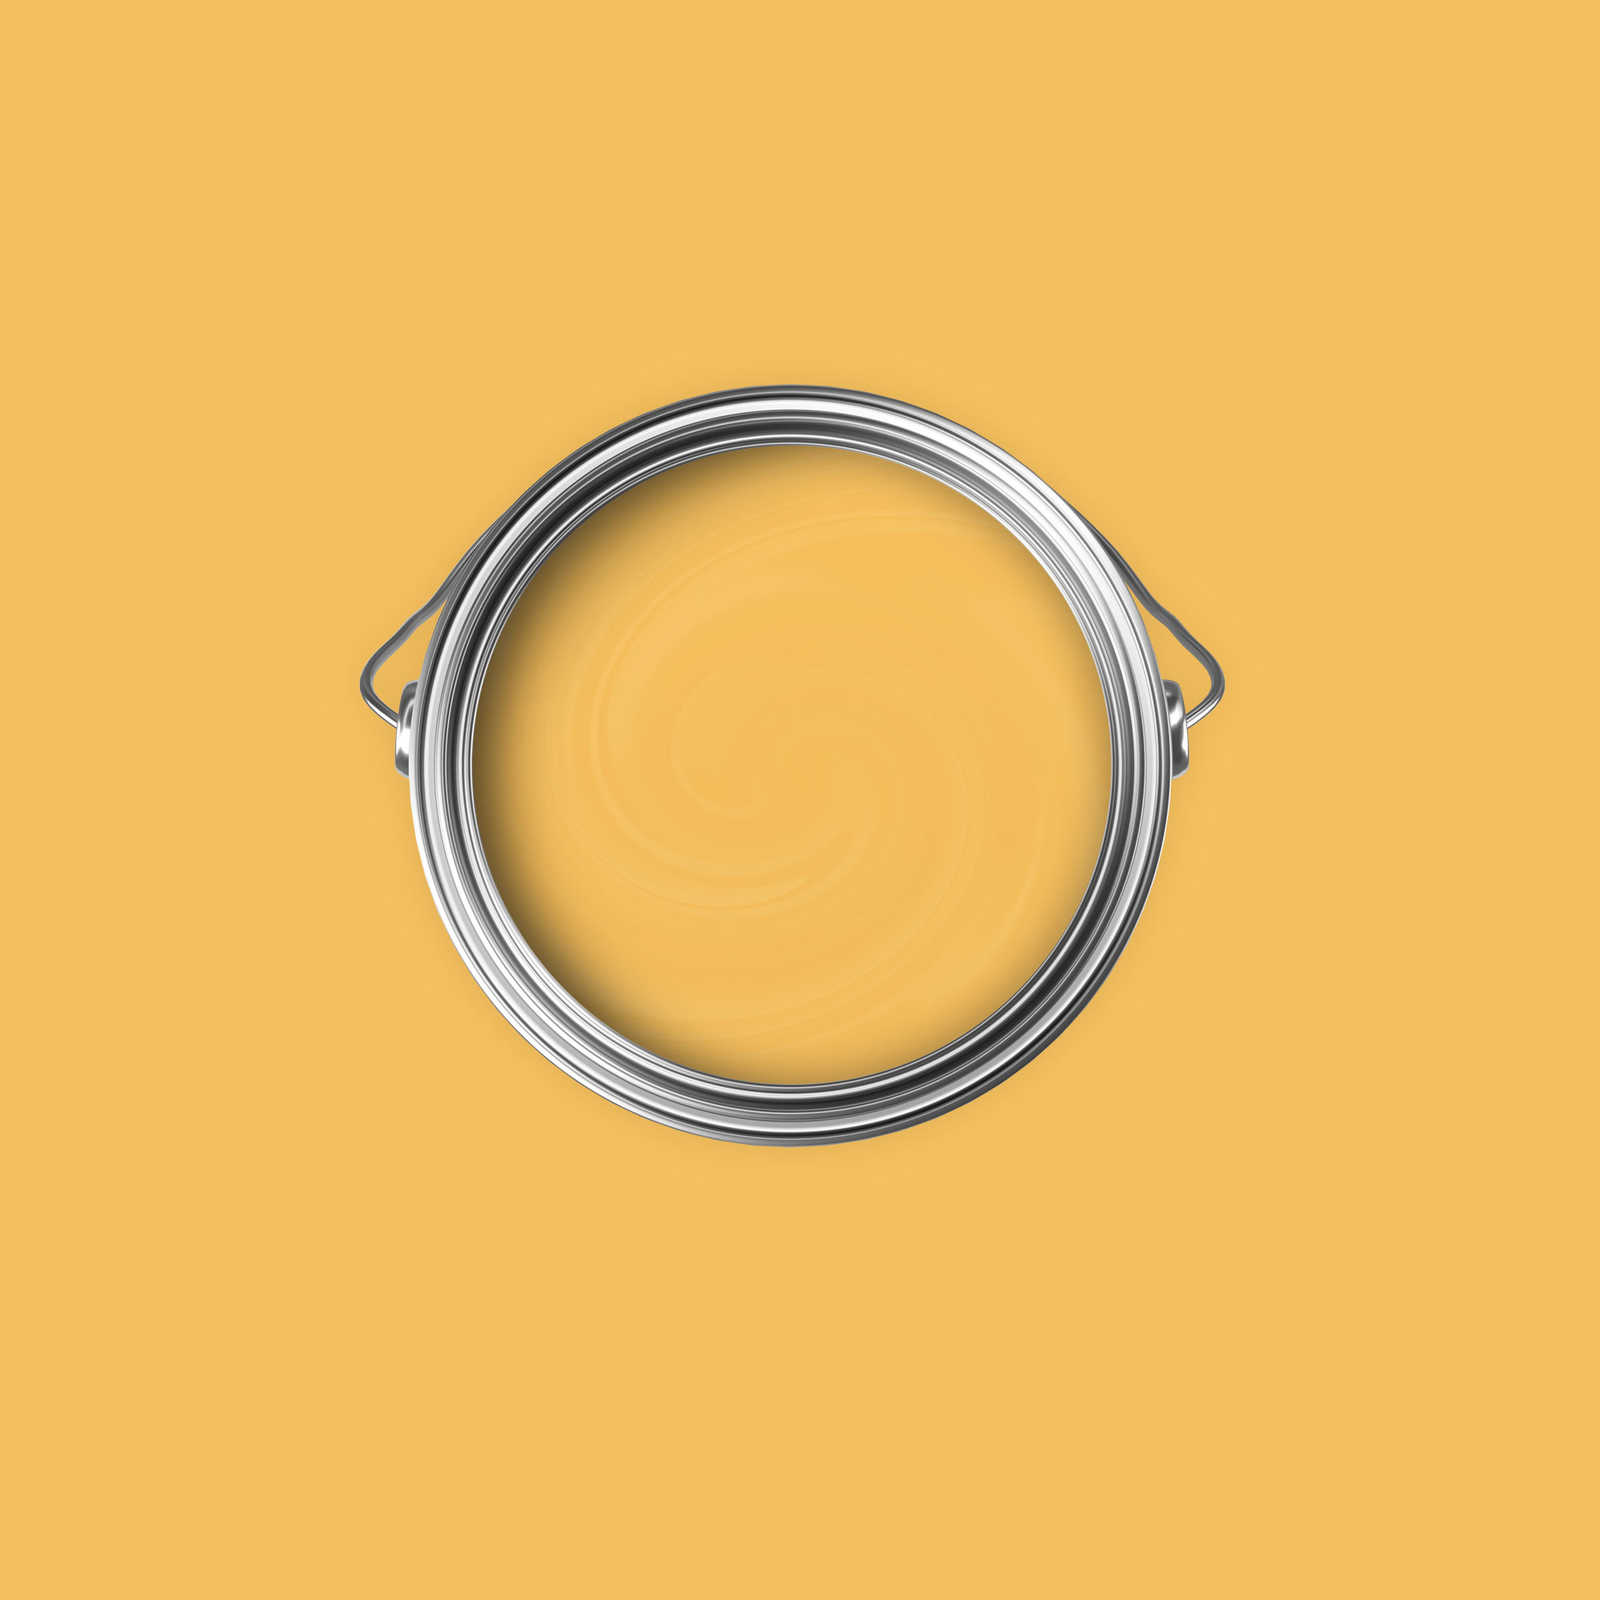             Premium Wall Paint Stimulating Sun Yellow »Juicy Yellow« NW805 – 2.5 litre
        